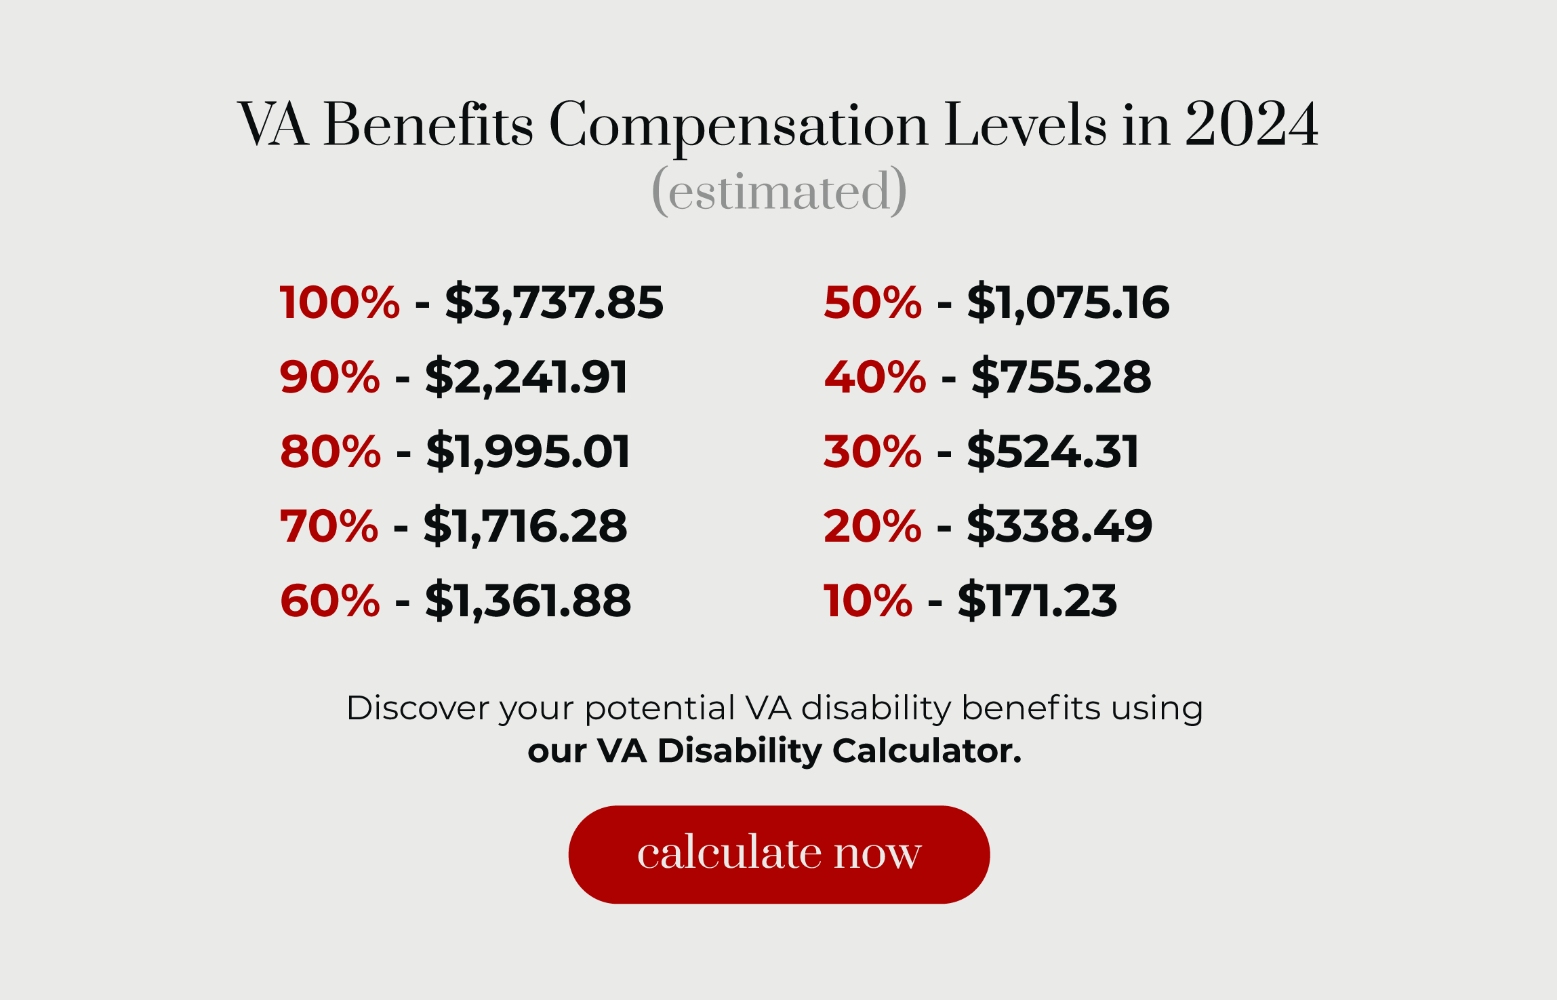 VA benefits compensation levels in 2024 estimated